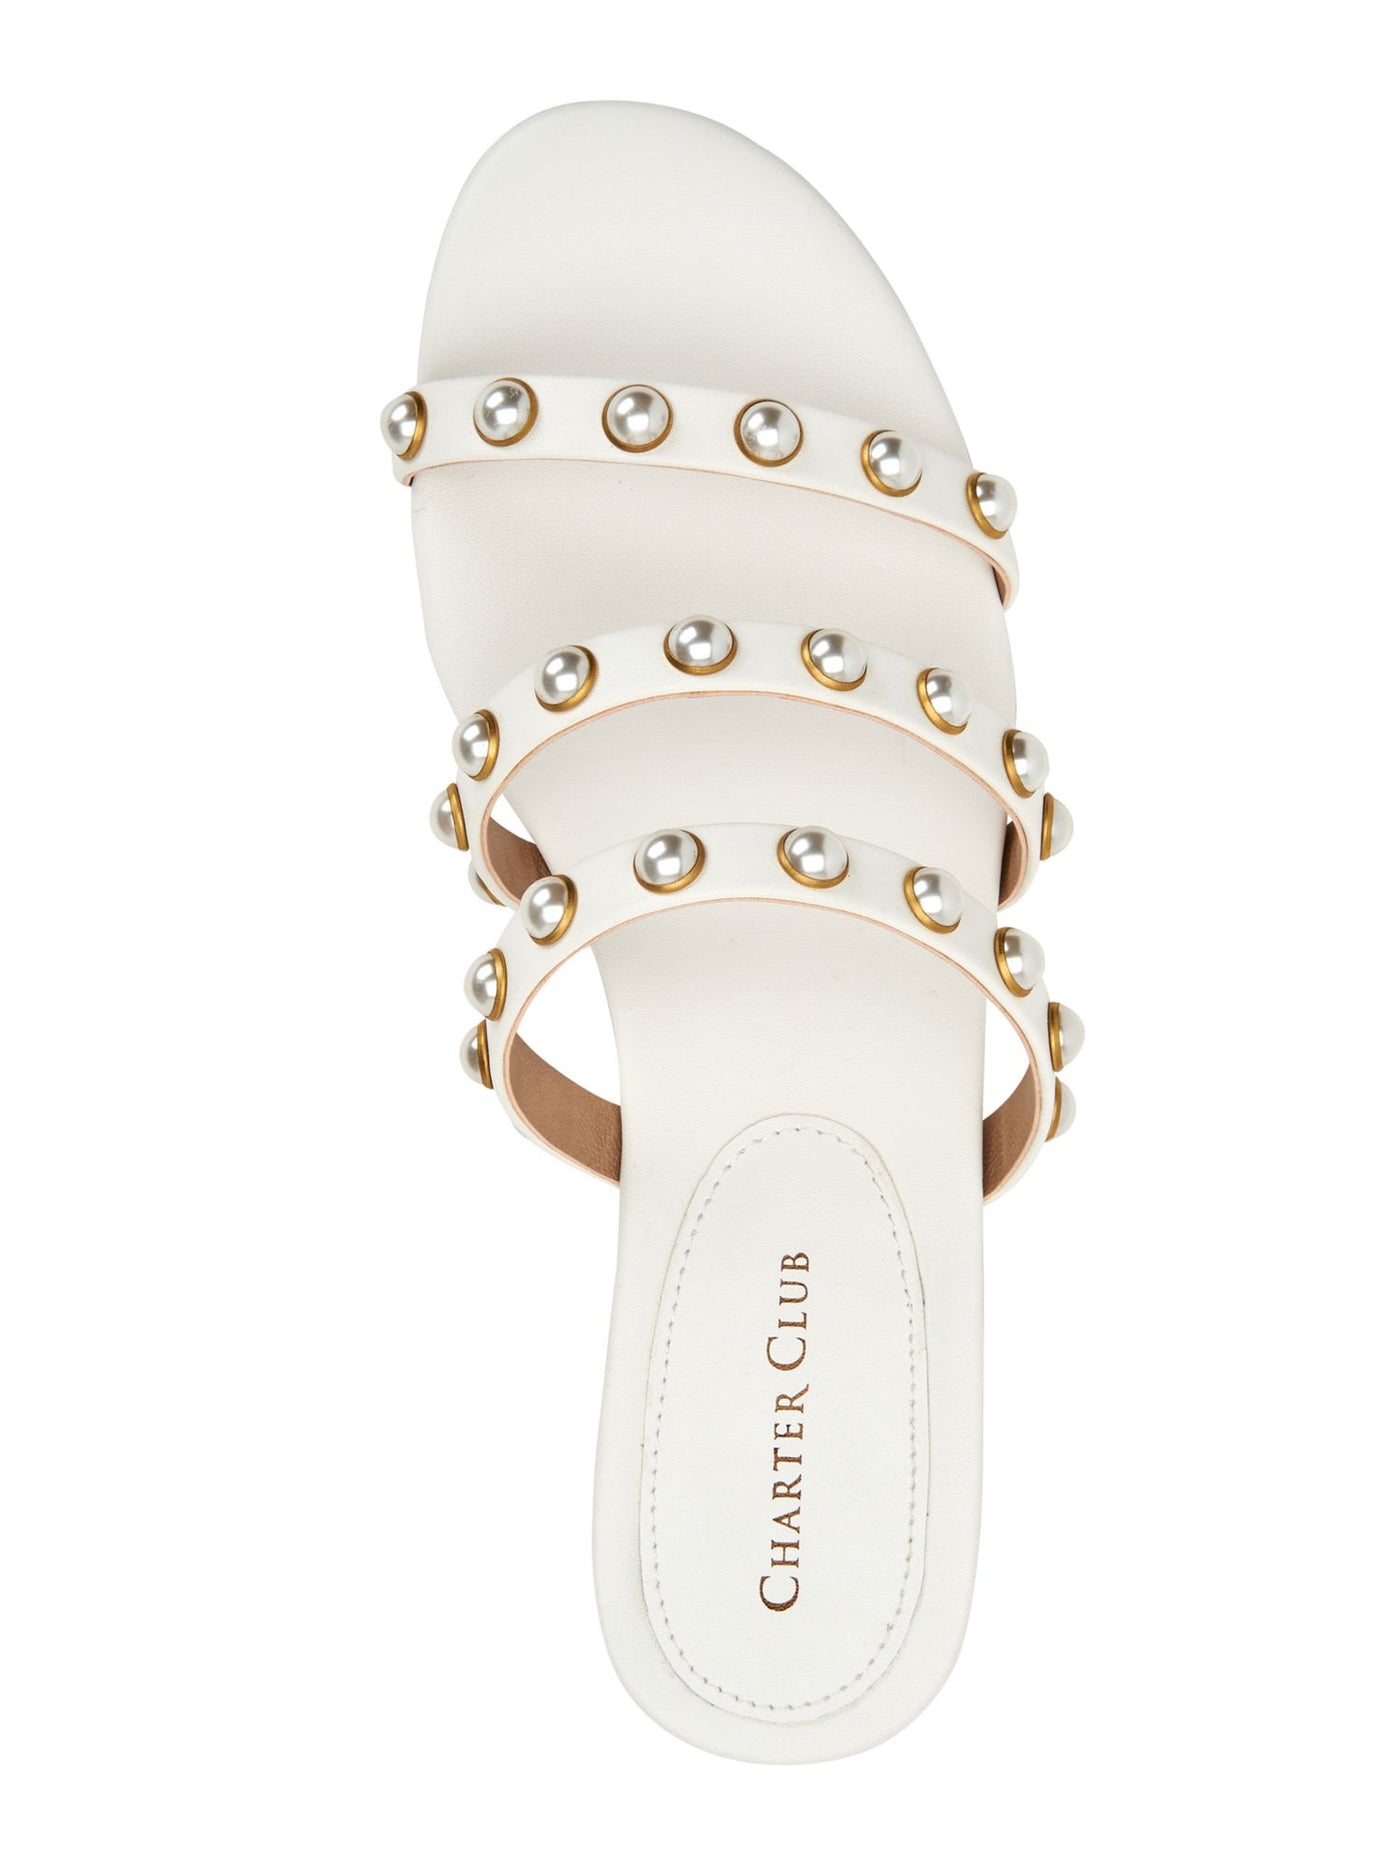 CHARTER CLUB Womens White Imitation Pearls Strappy Soraya Almond Toe Slip On Sandals Shoes 8 M